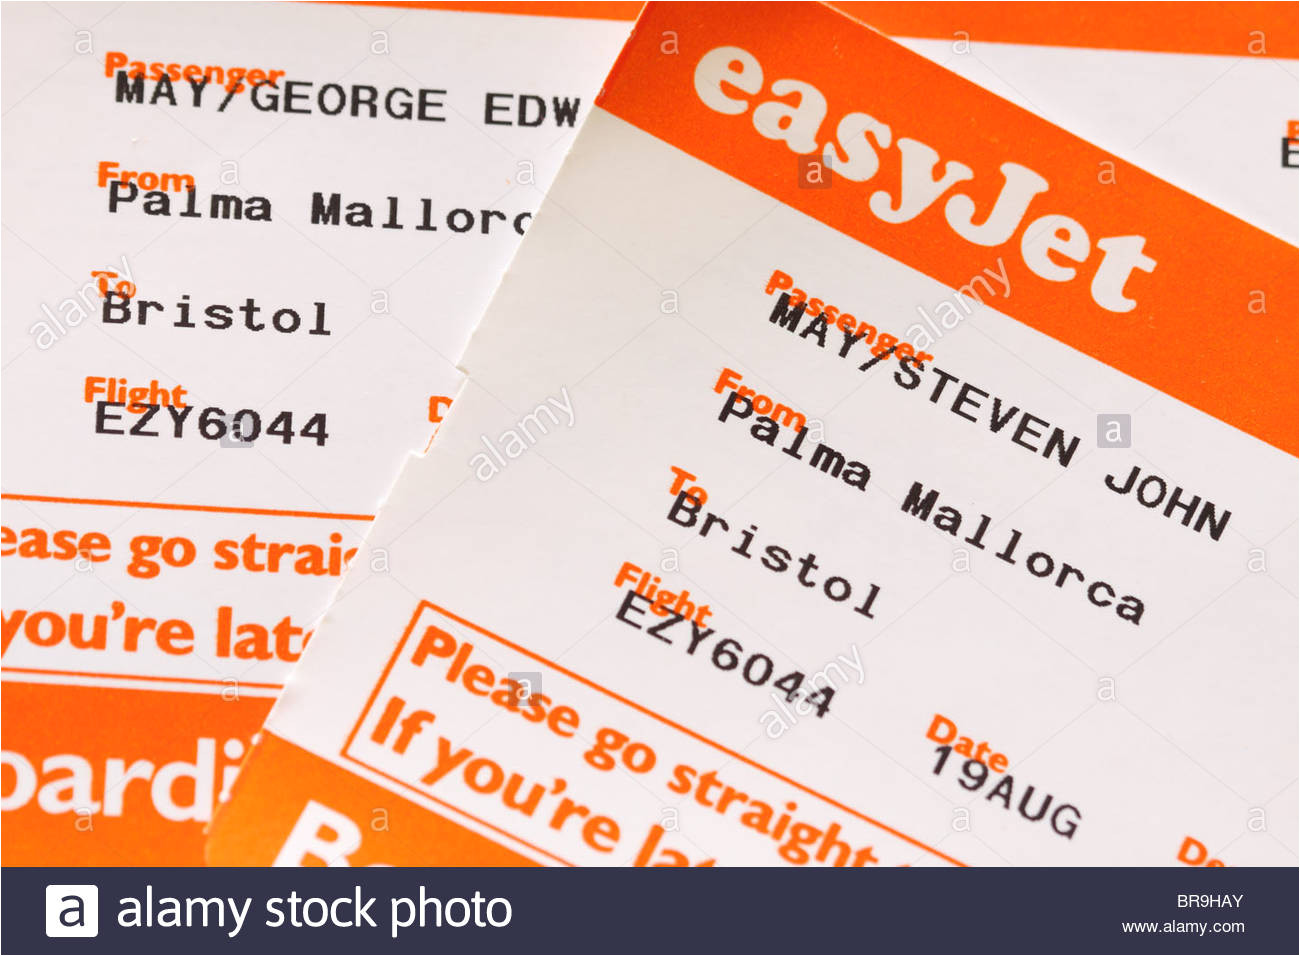 easyjet airline flug boarding pass ticket br9hay jpg